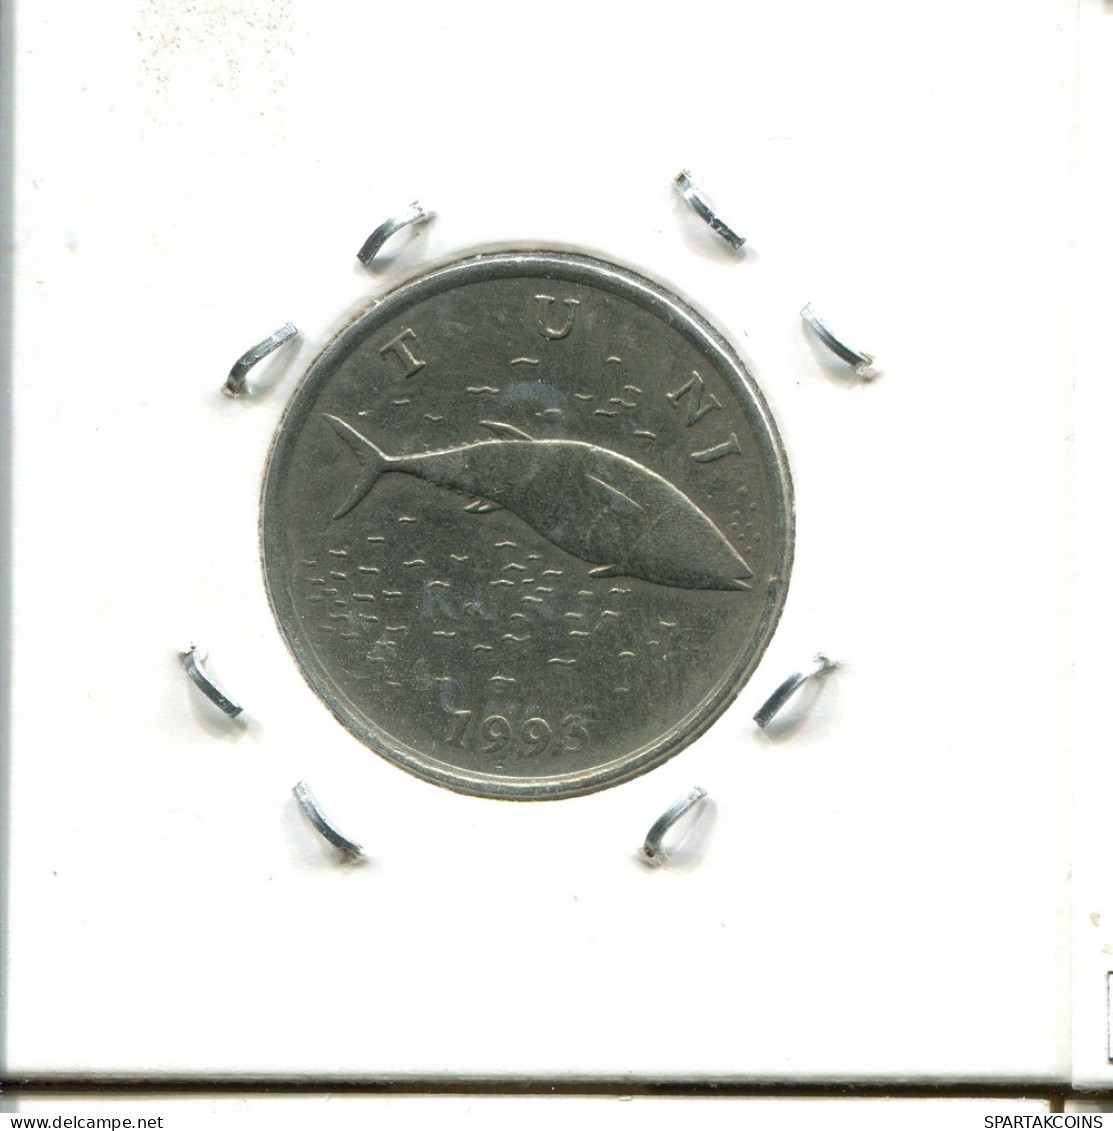 2 KUNE 1993 CROACIA CROATIA Moneda #AS562.E.A - Croatia